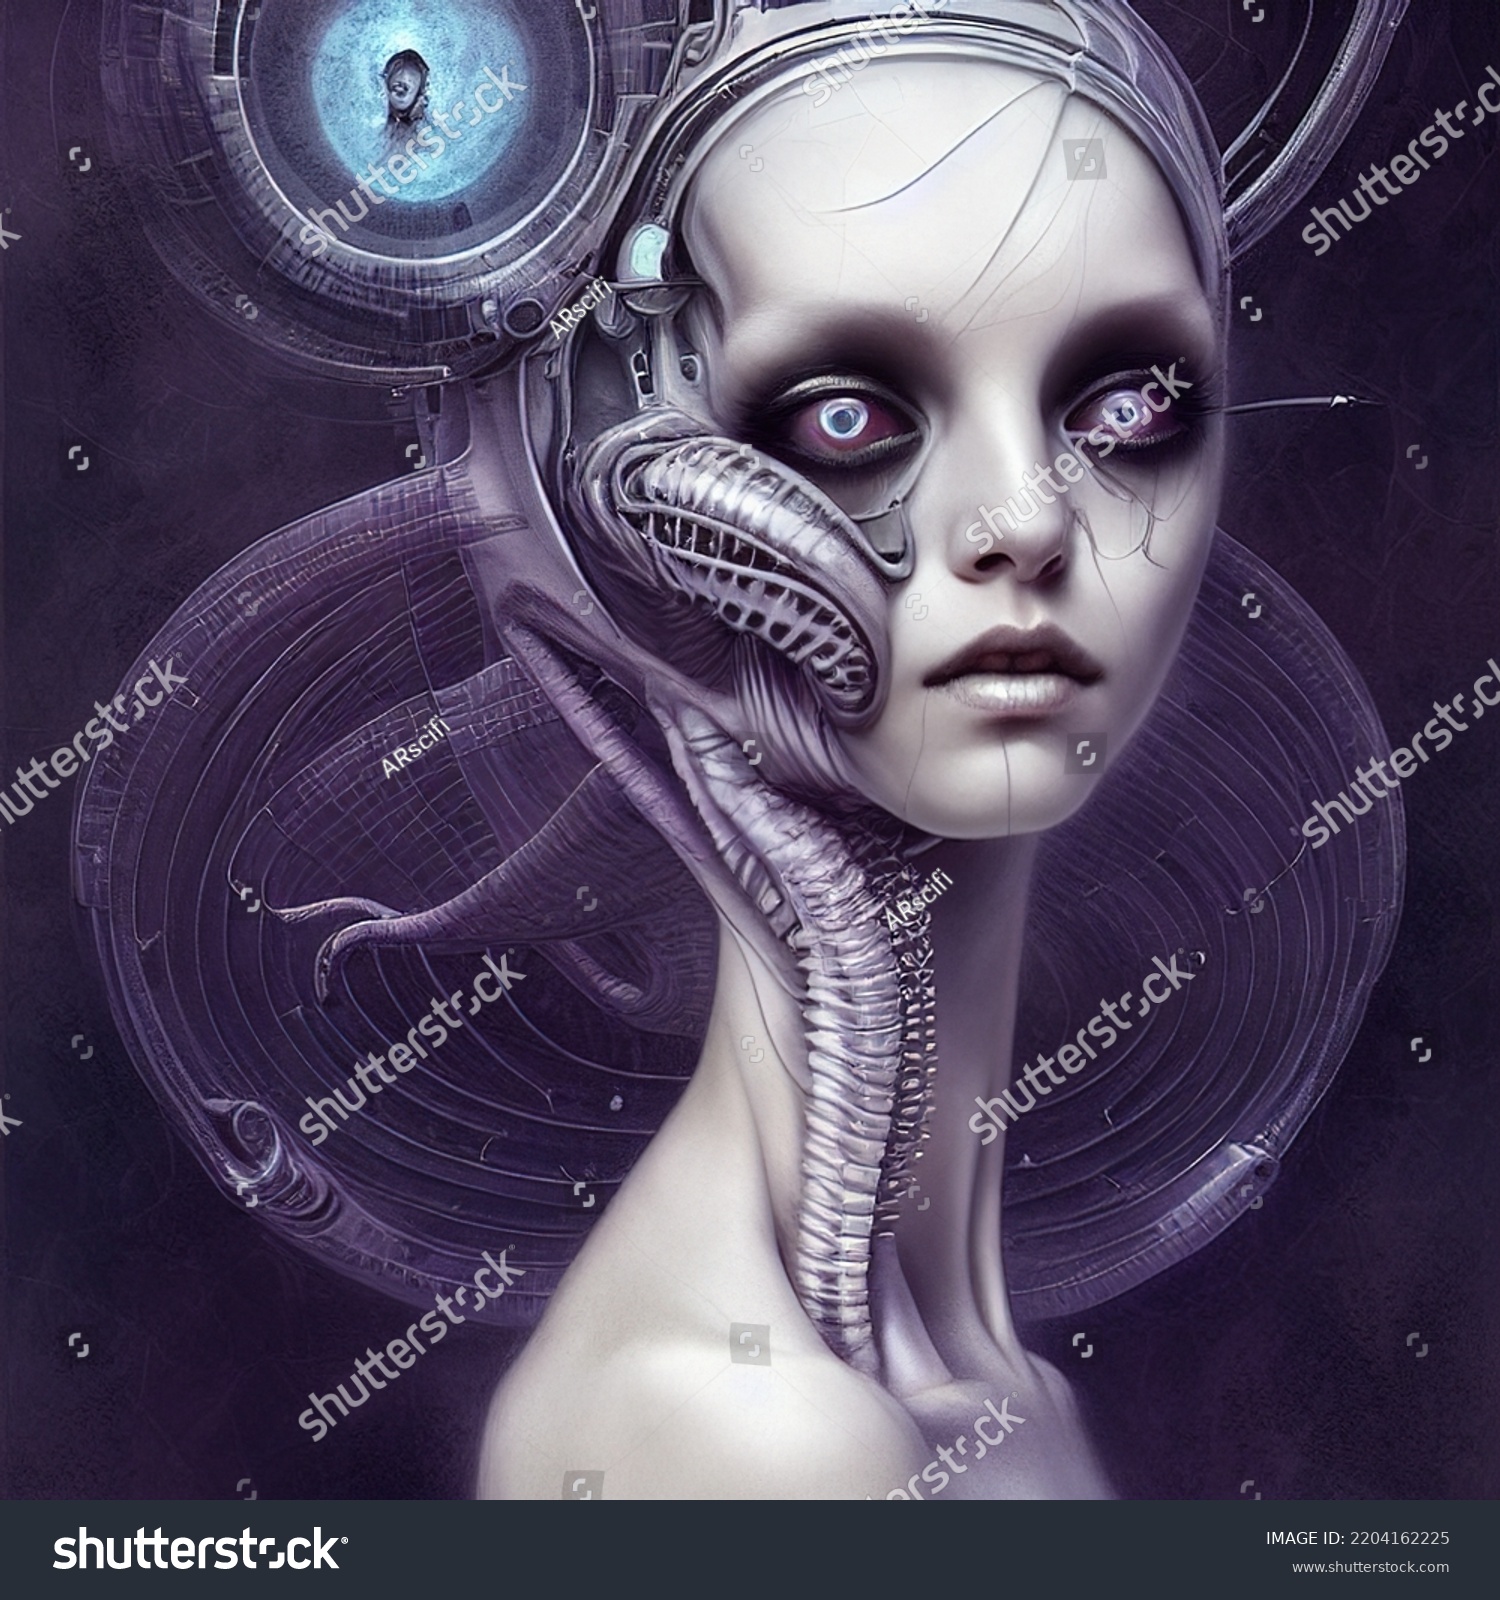 3d Rendering 3d Illustration Alien Humanoid Stock Illustration 2204162225 Shutterstock 